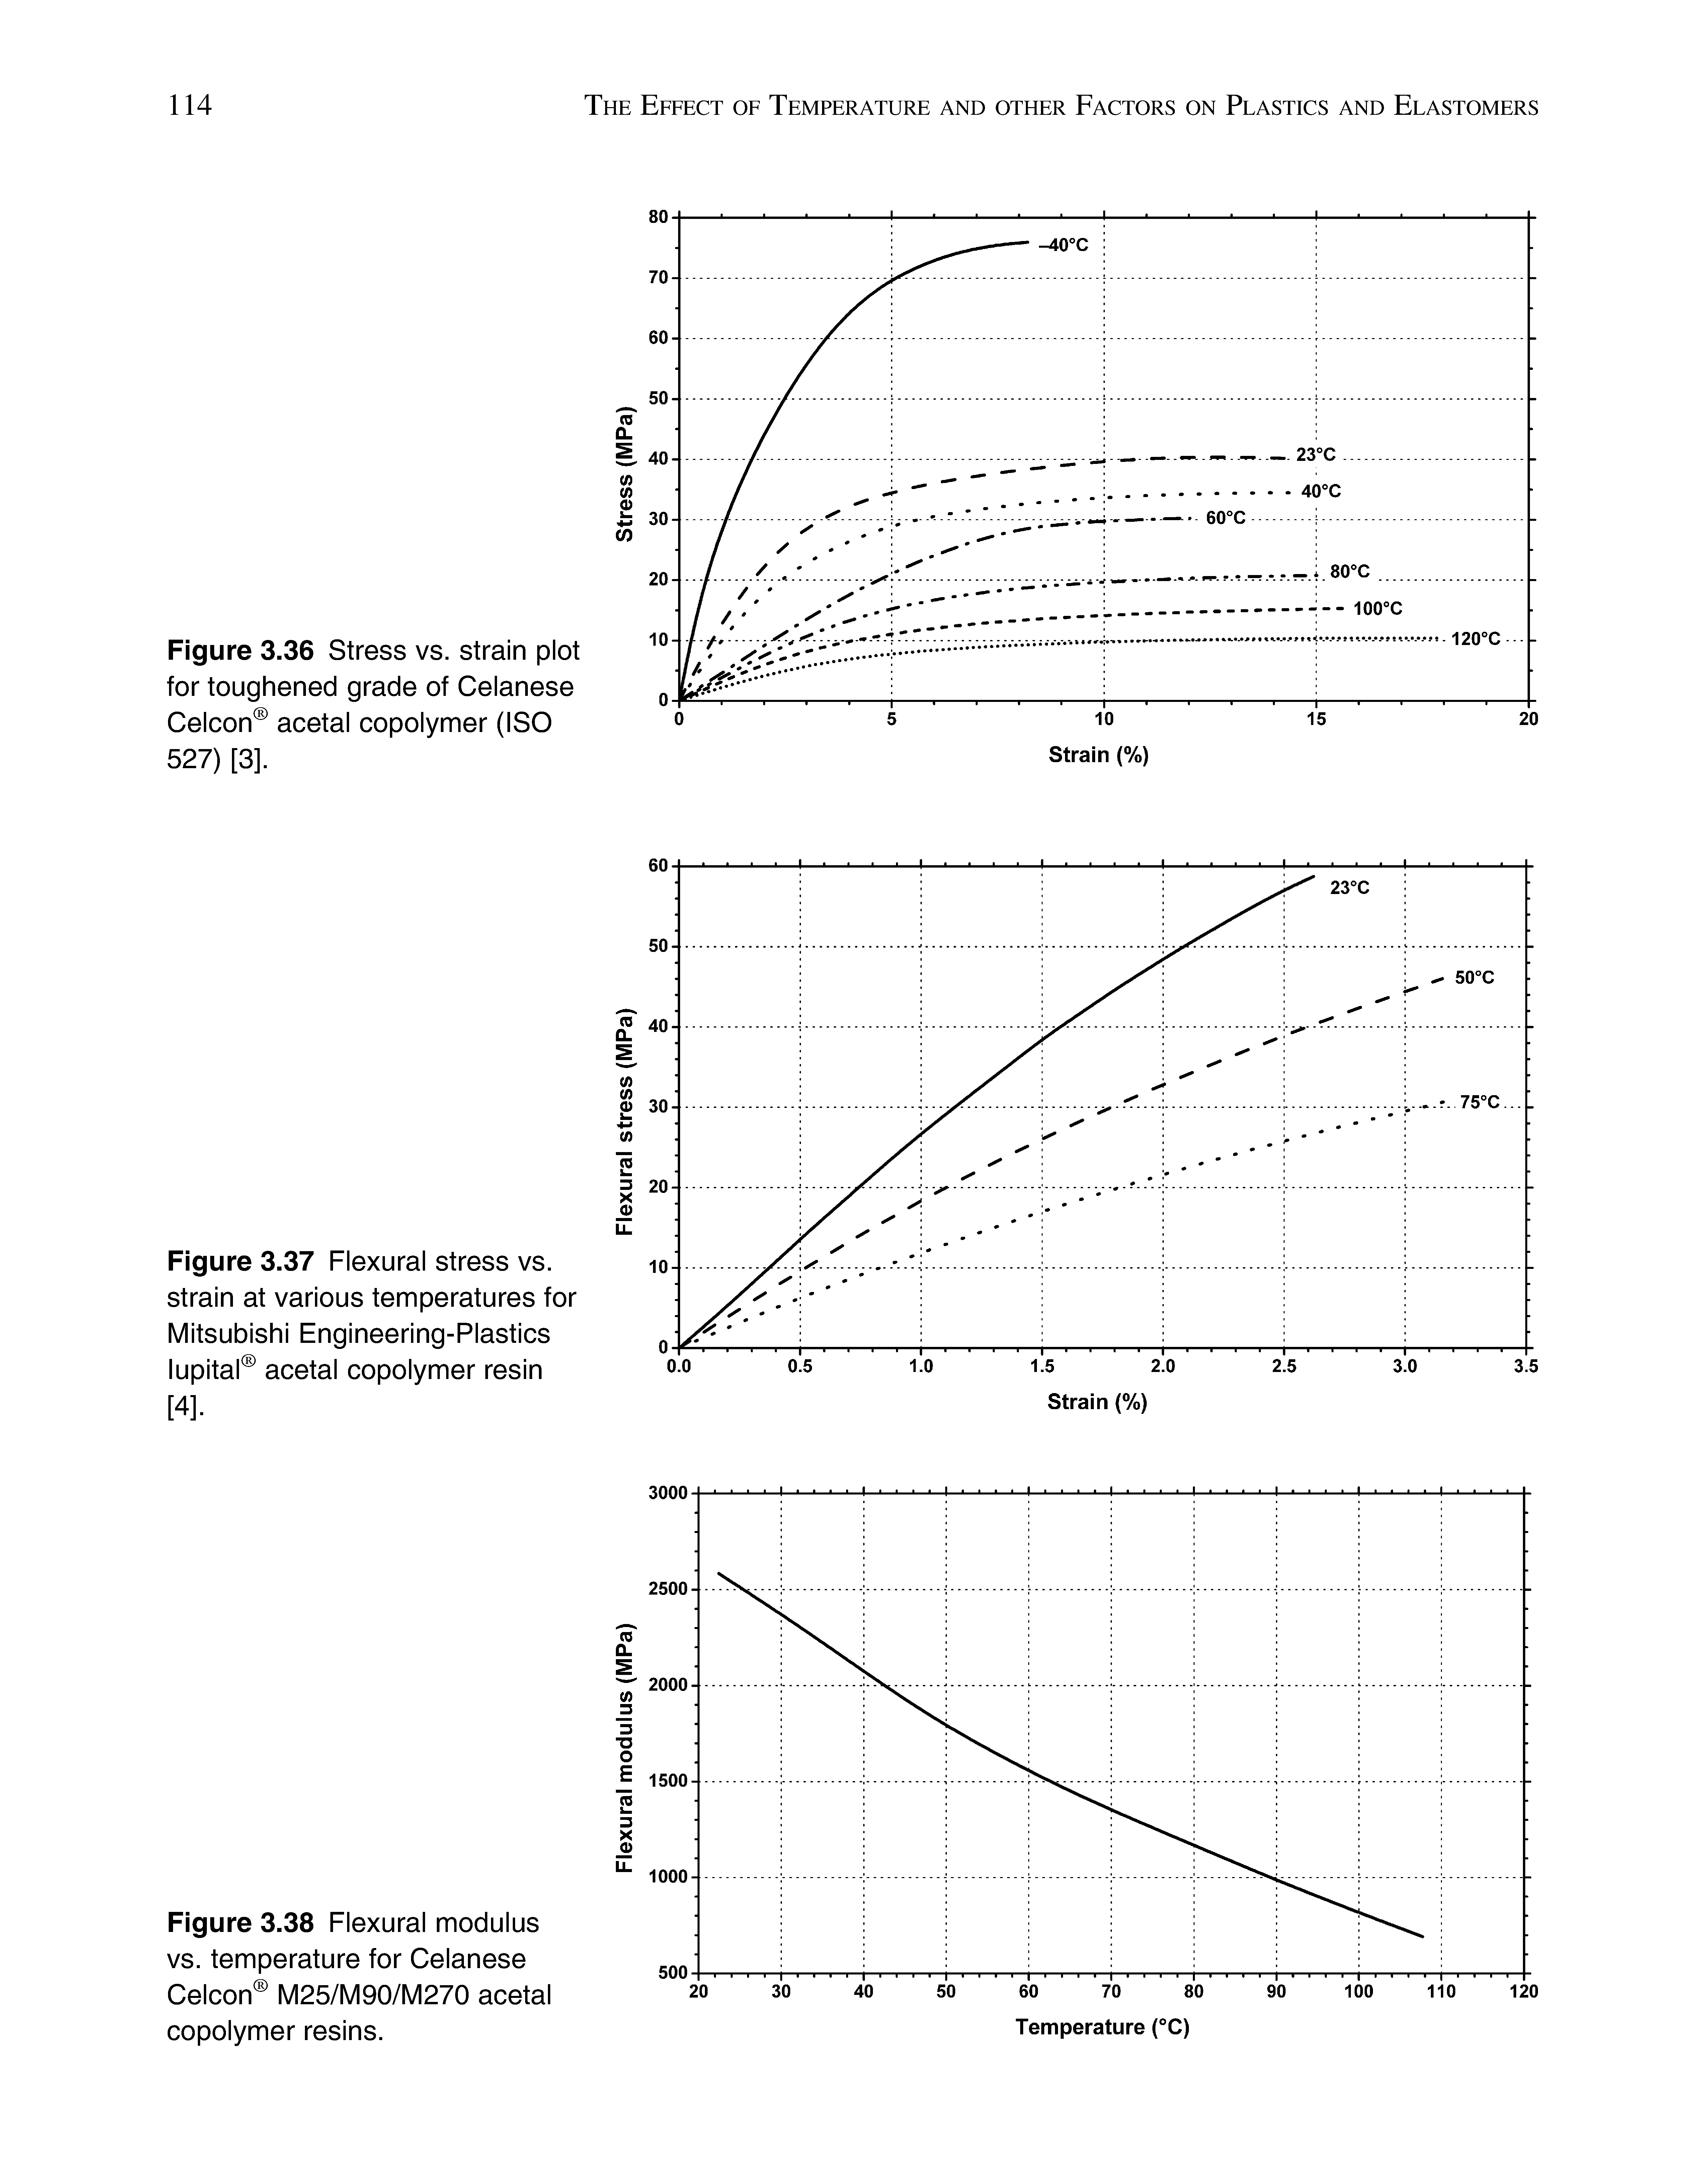 Figure 3.37 Flexural stress vs. strain at various temperatures for Mitsubishi Engineering-Plastics lupital acetal copolymer resin [4].